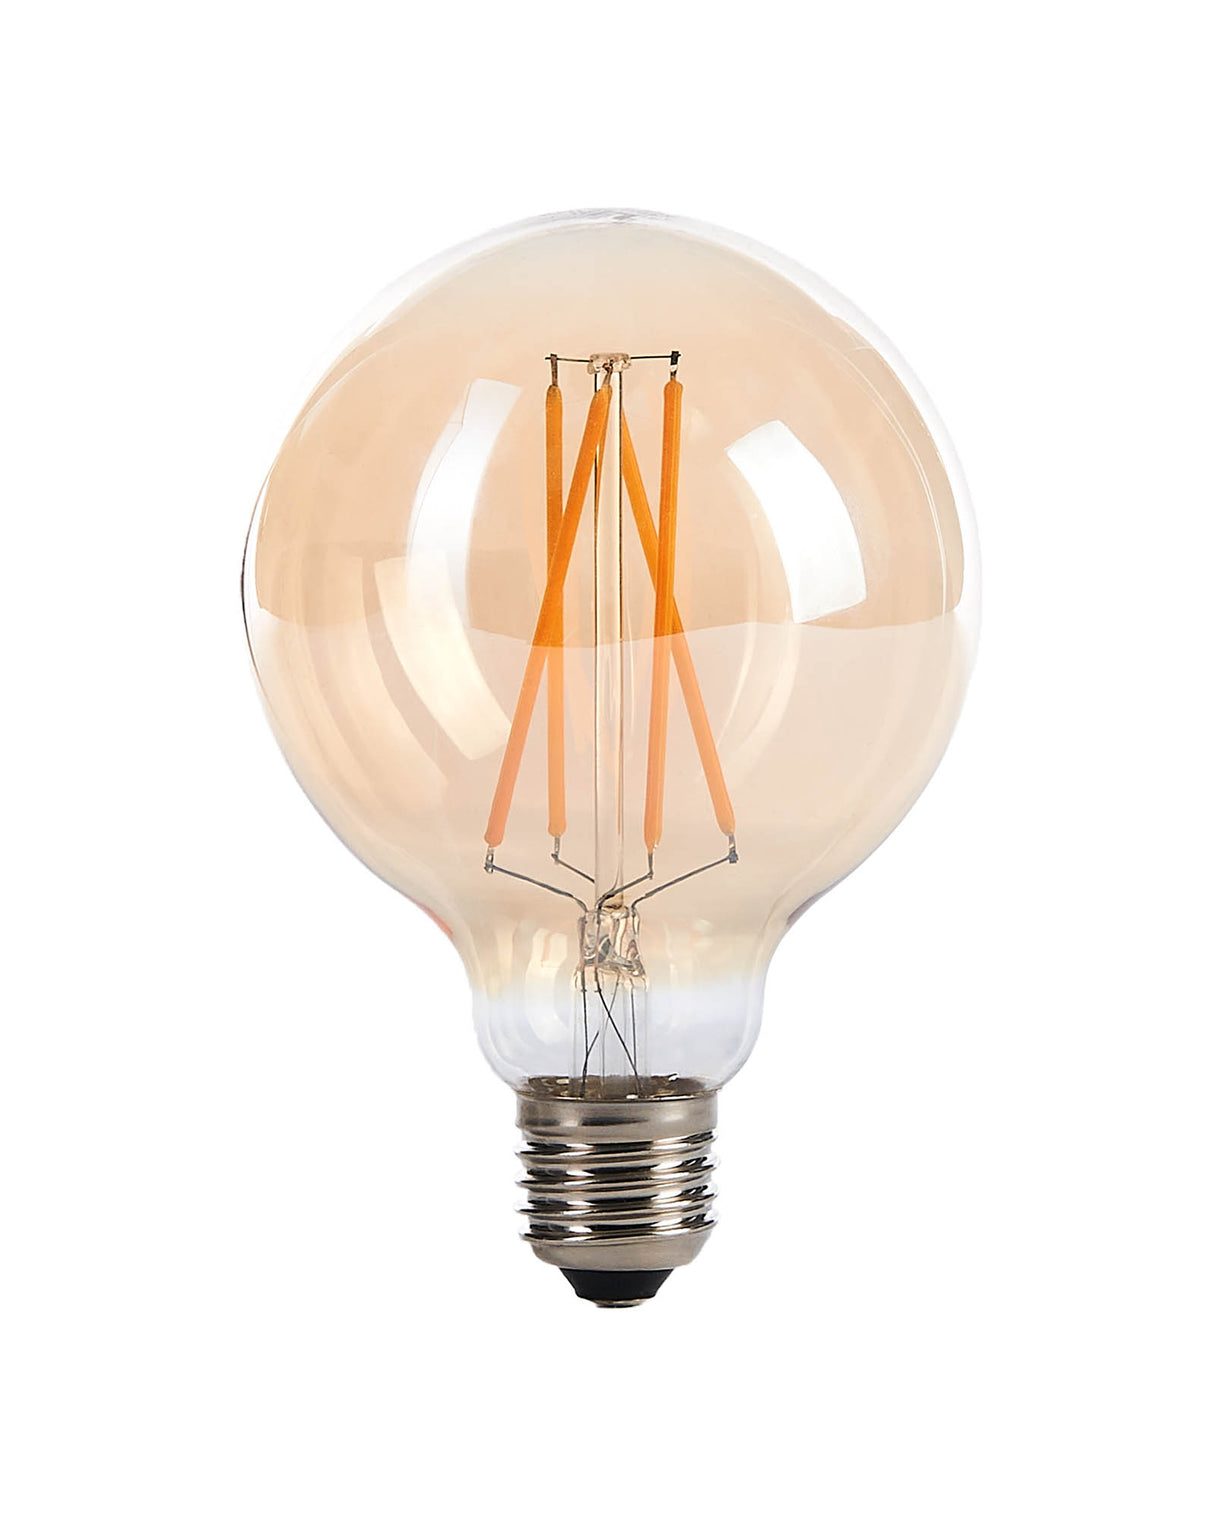 LINK FESTOON 4W E27 Dimmable Globe Filament LED Bulb, Warm White